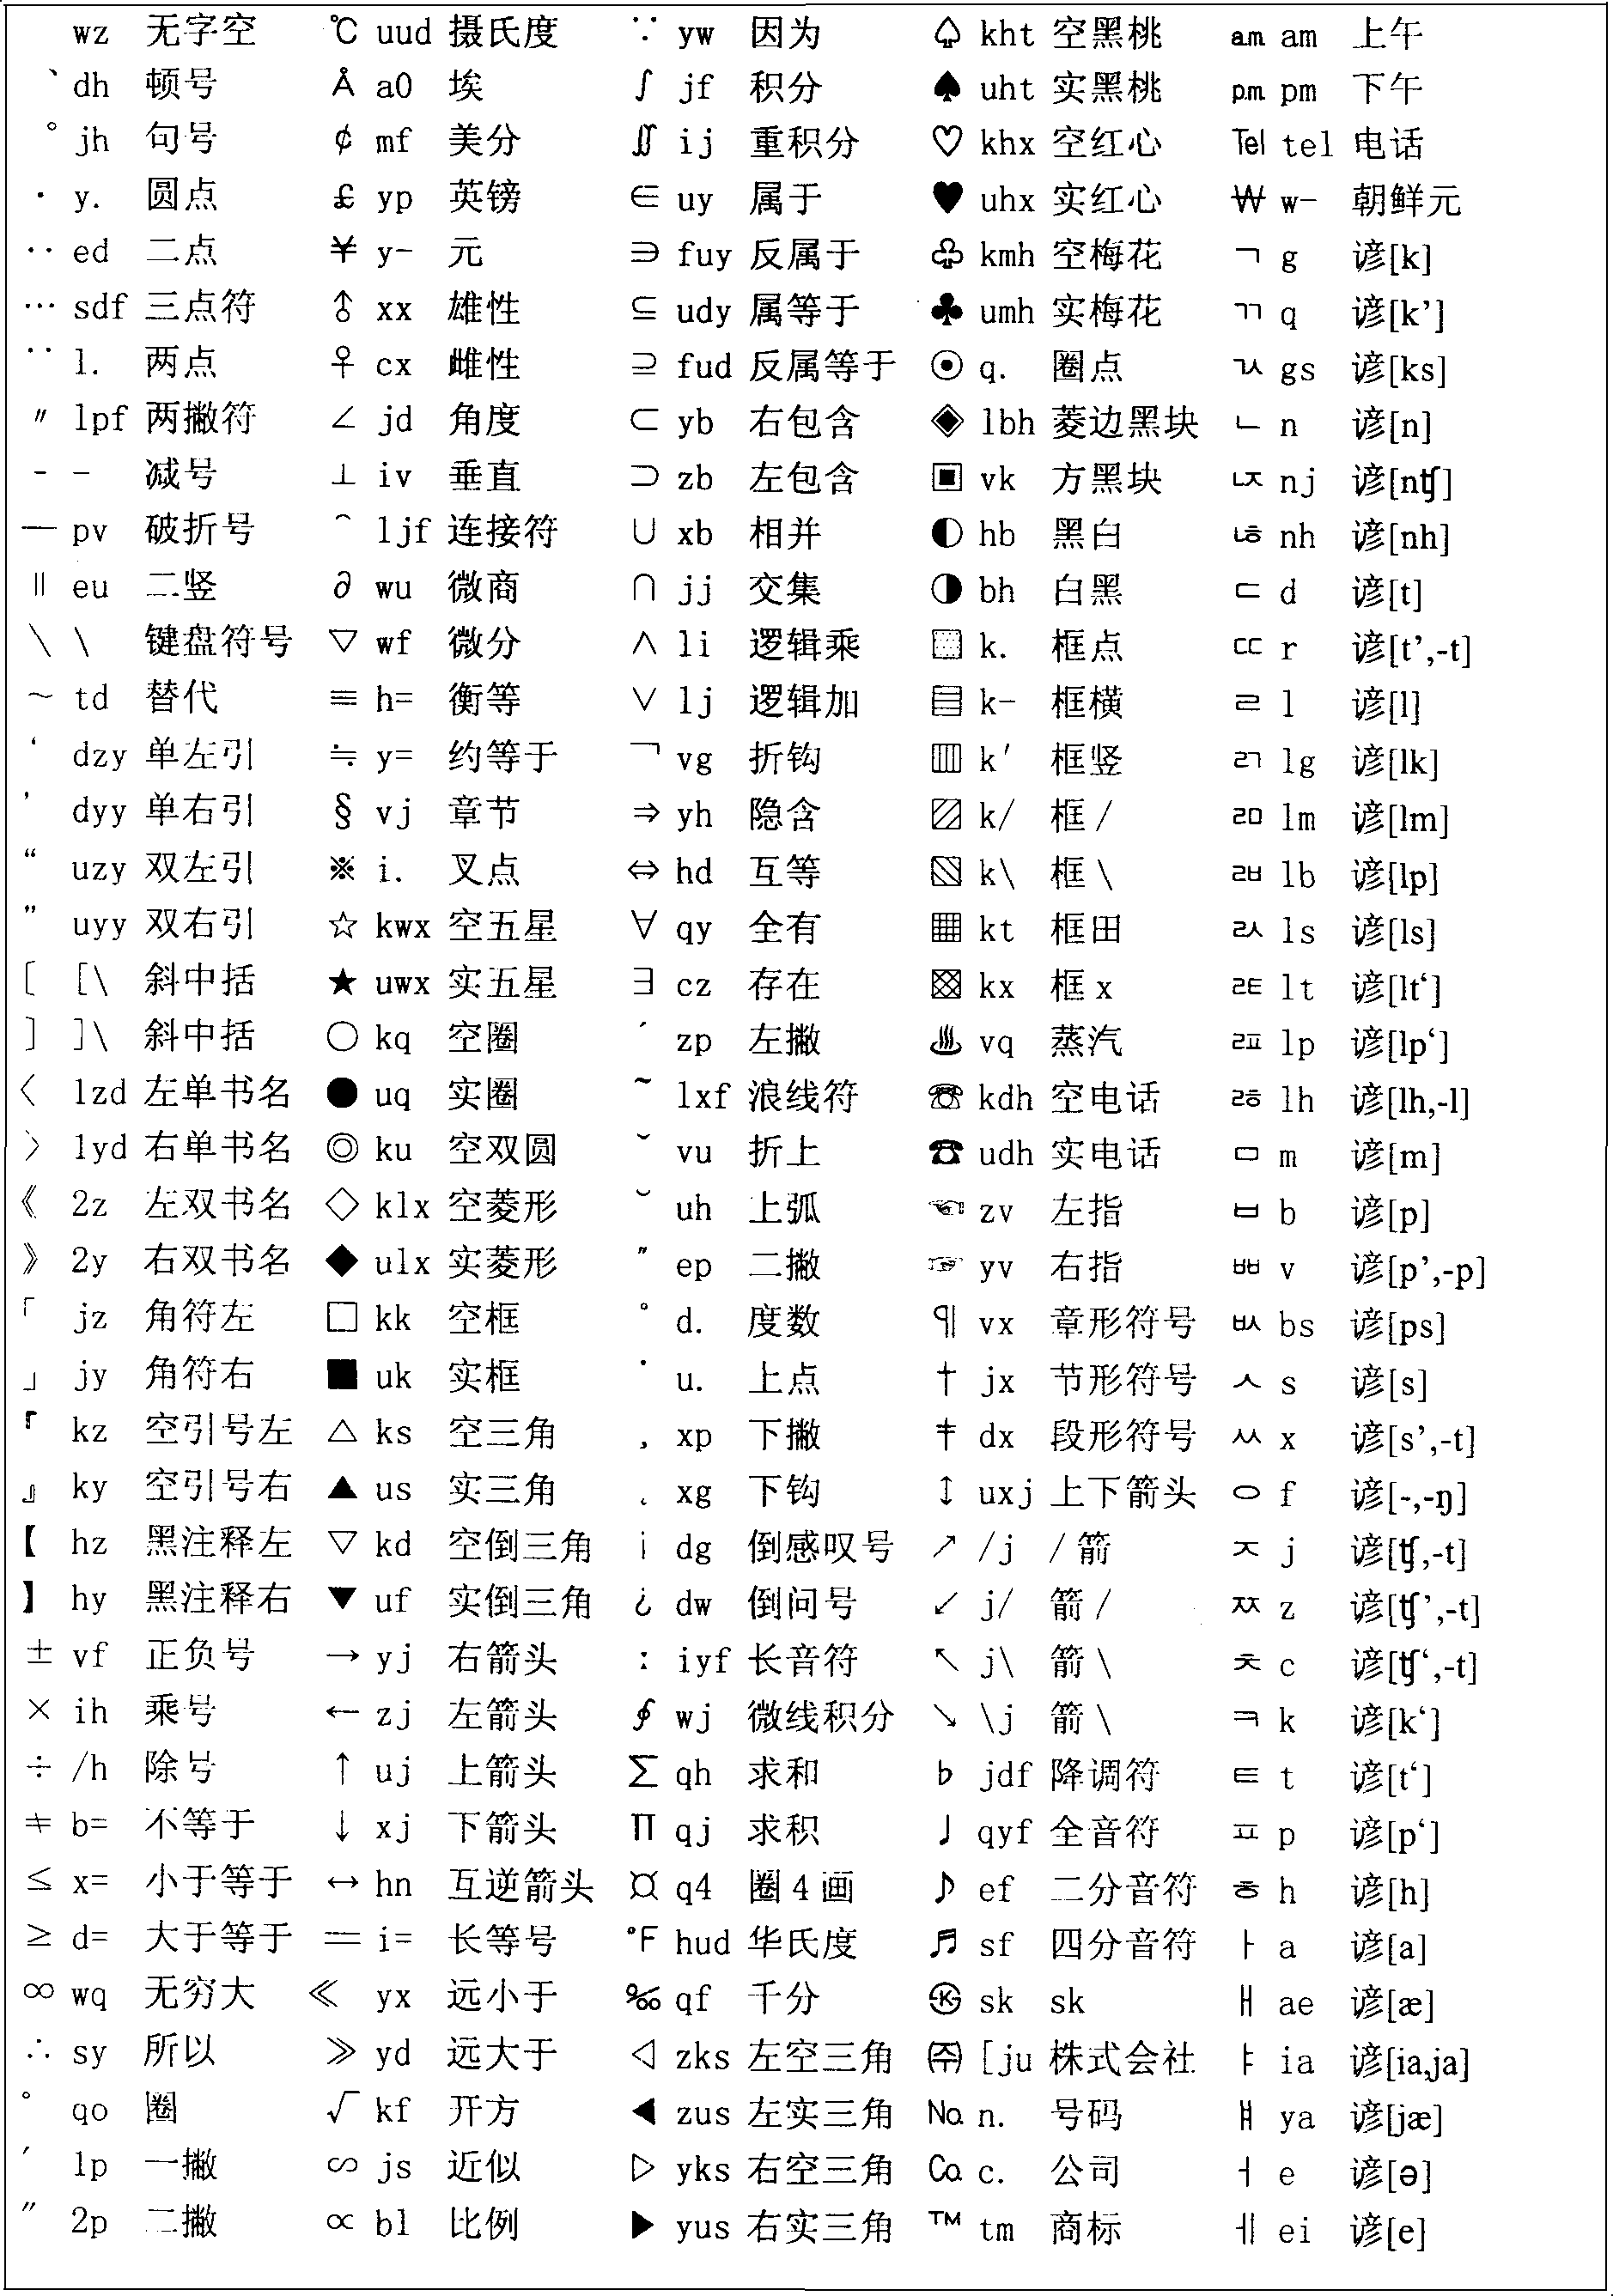 Phonetical shape code inputting method for korea, Japanese and Twin byte symbols